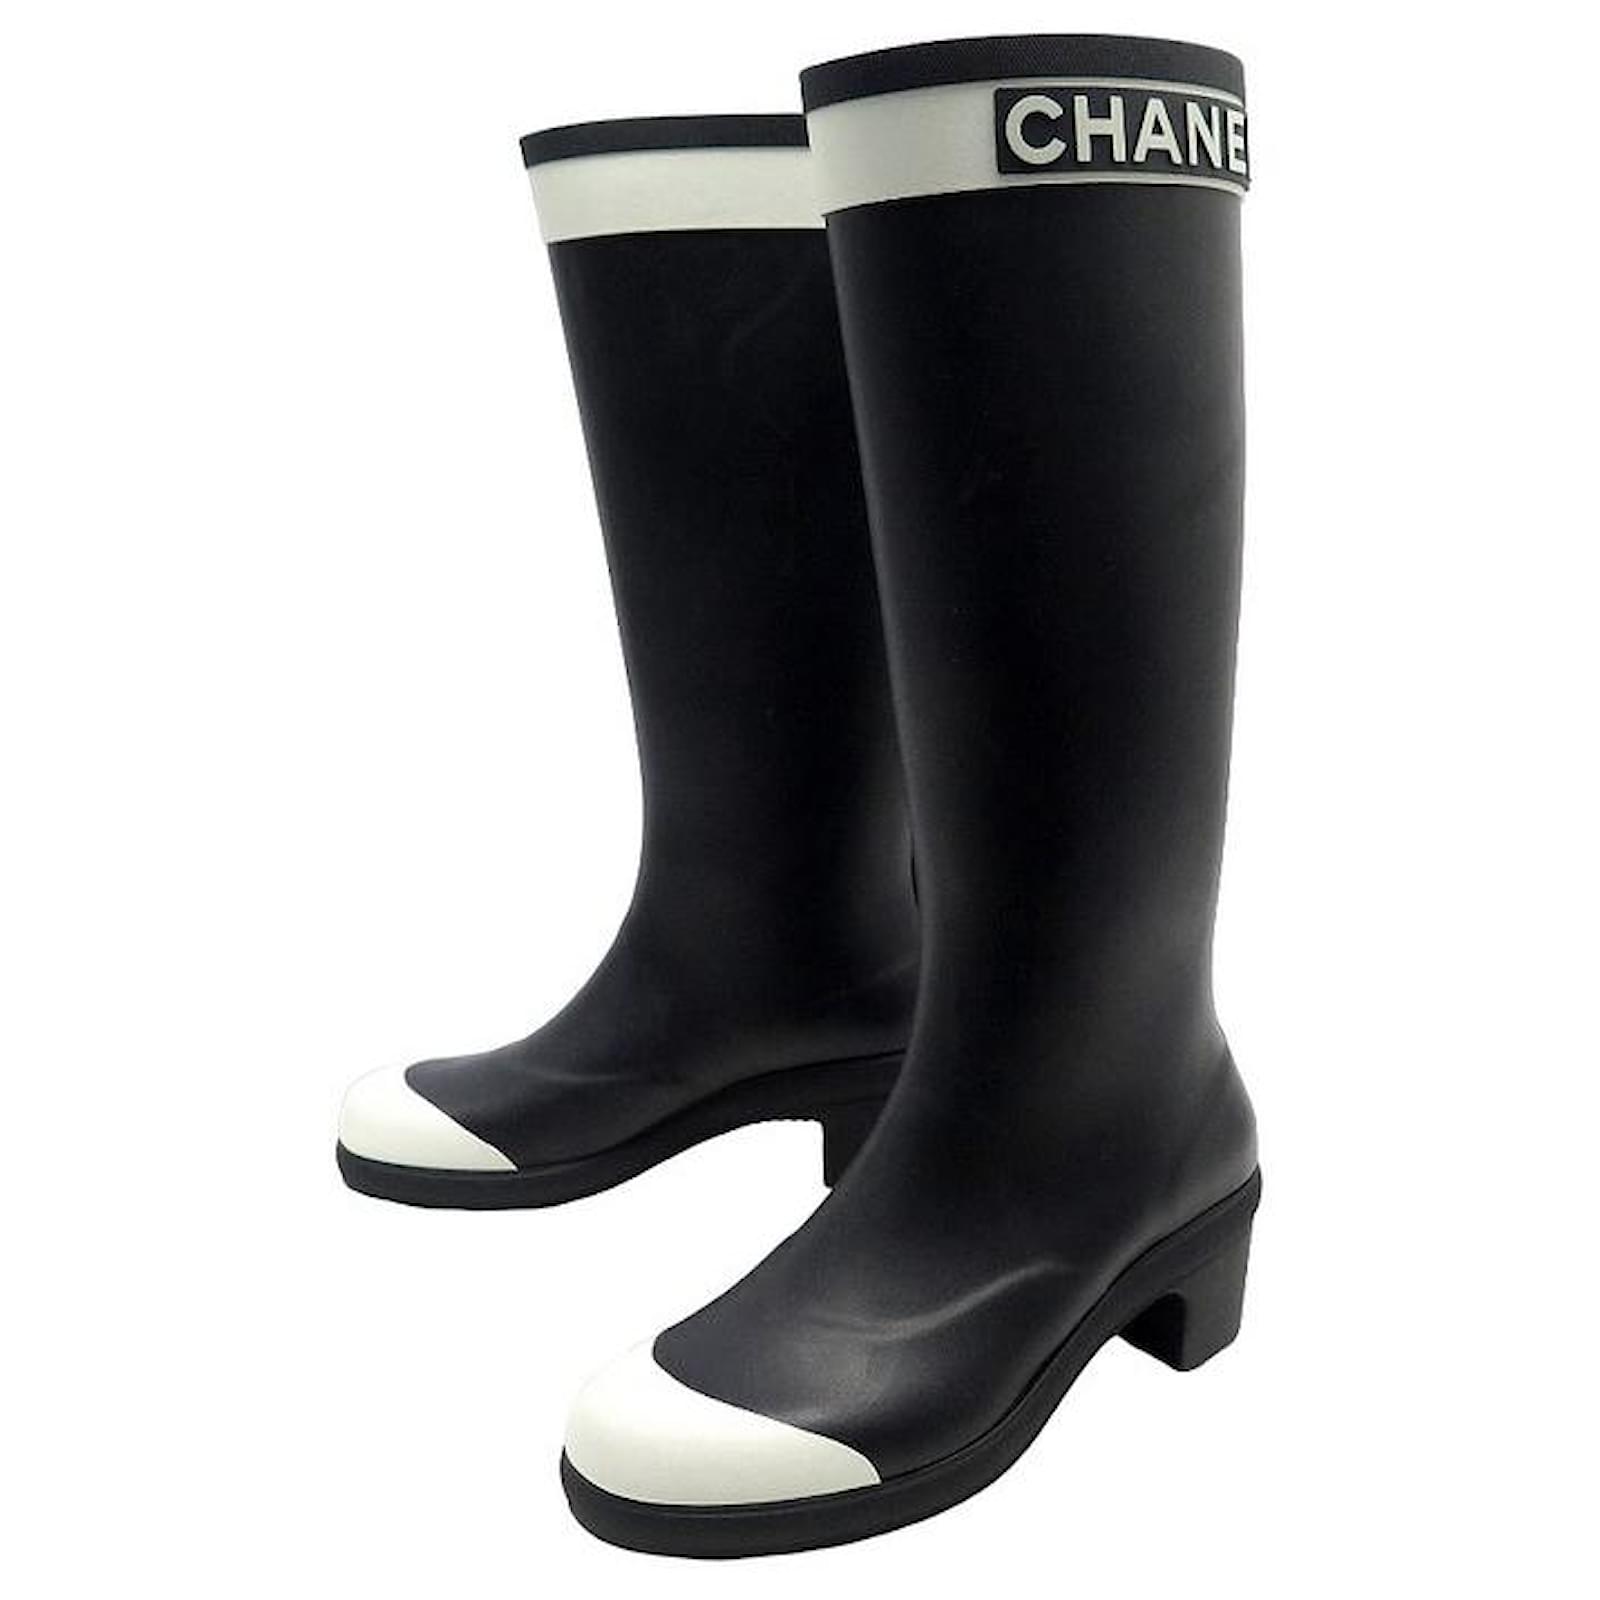 Boots Chanel Chanel Shoes Rain Boots G34076 38 Rubber Box Rain Boots